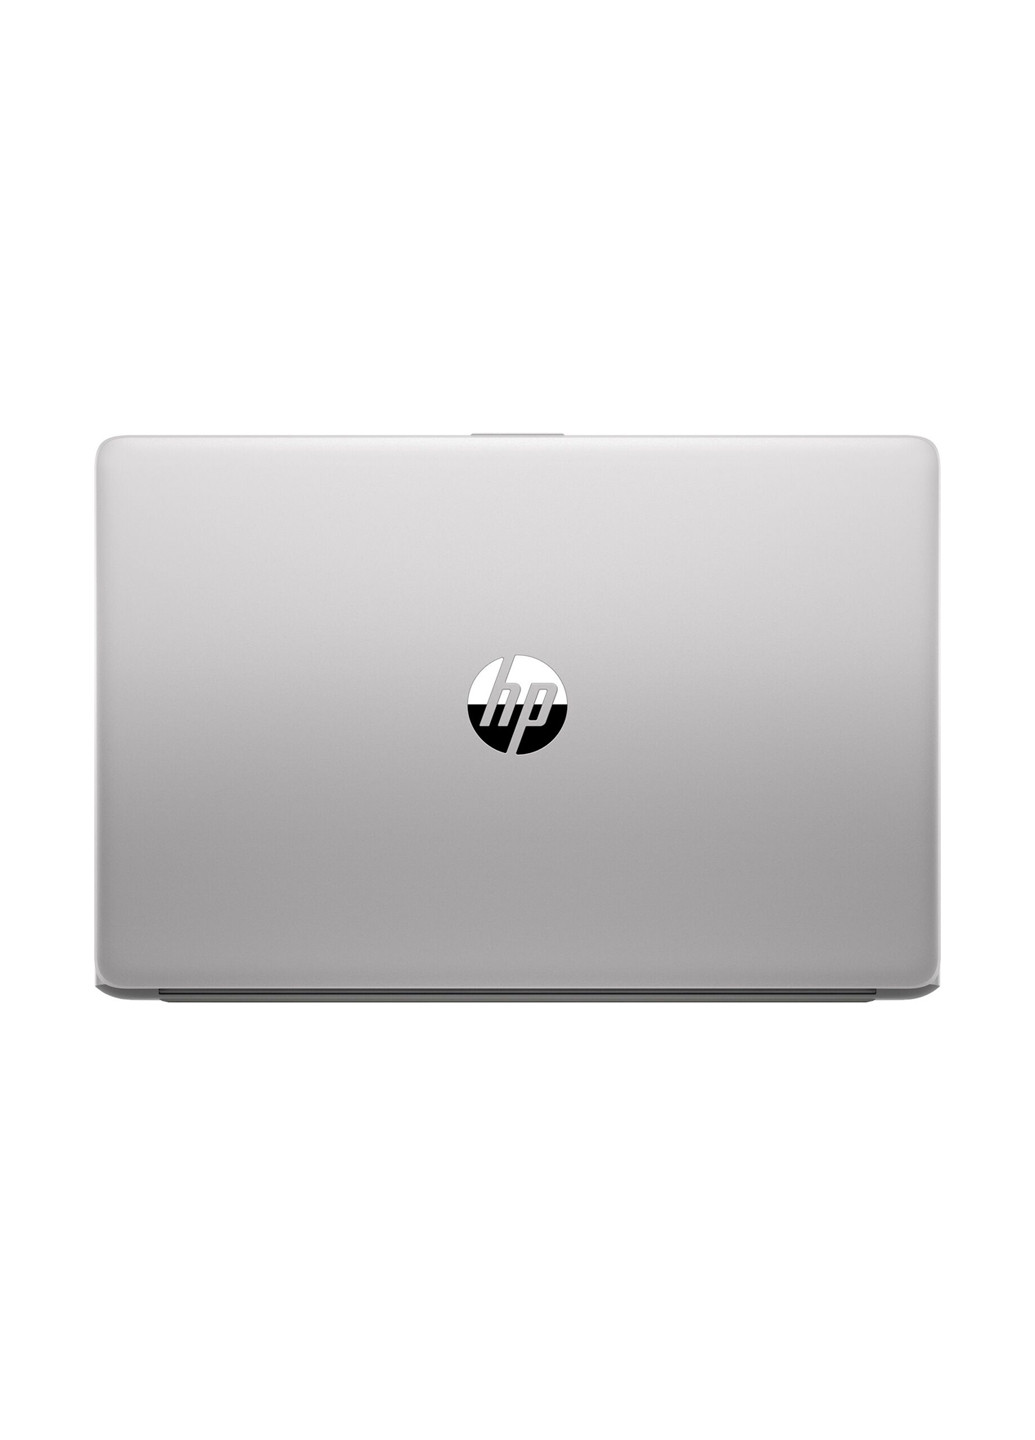 Ноутбук HP 250 g7 (6bp52ea) silver (136402424)